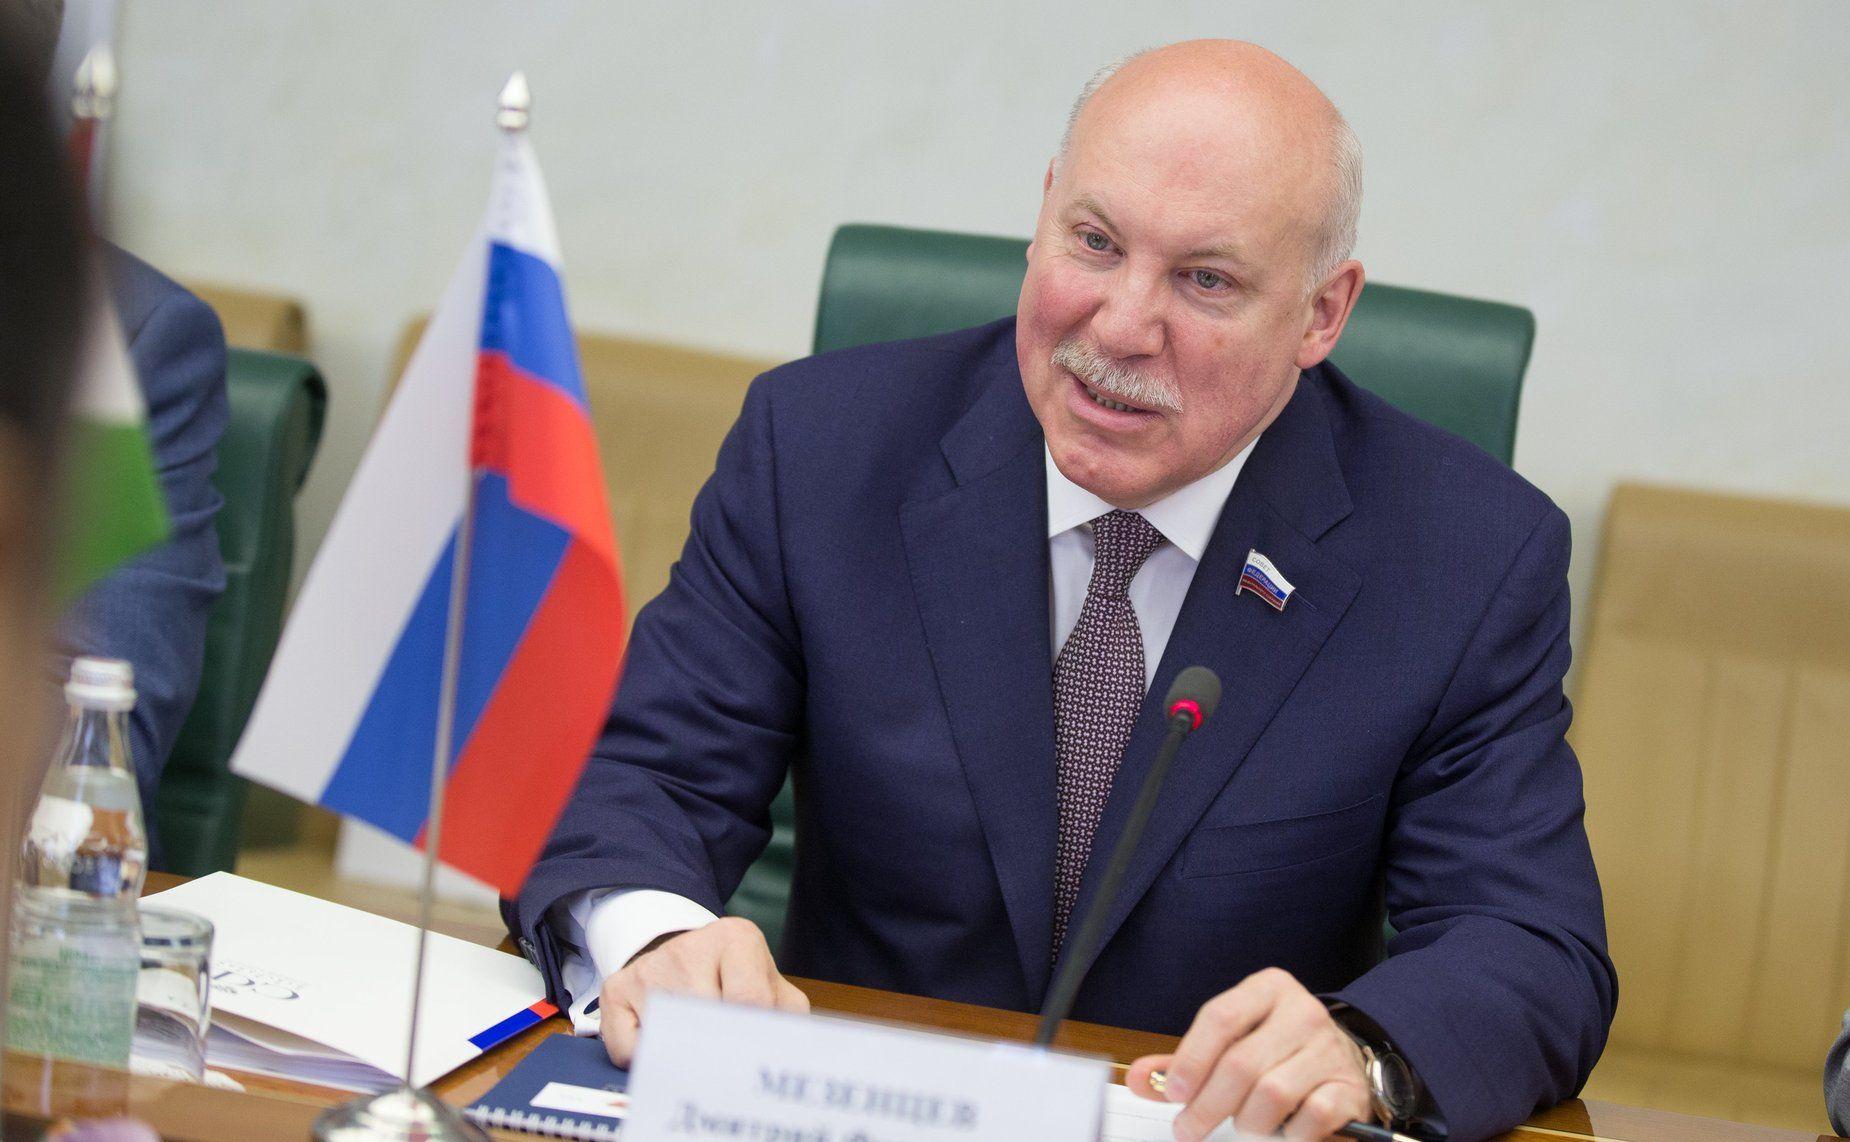 Мезенцев раскрыл повестку встречи Путина и Лукашенко